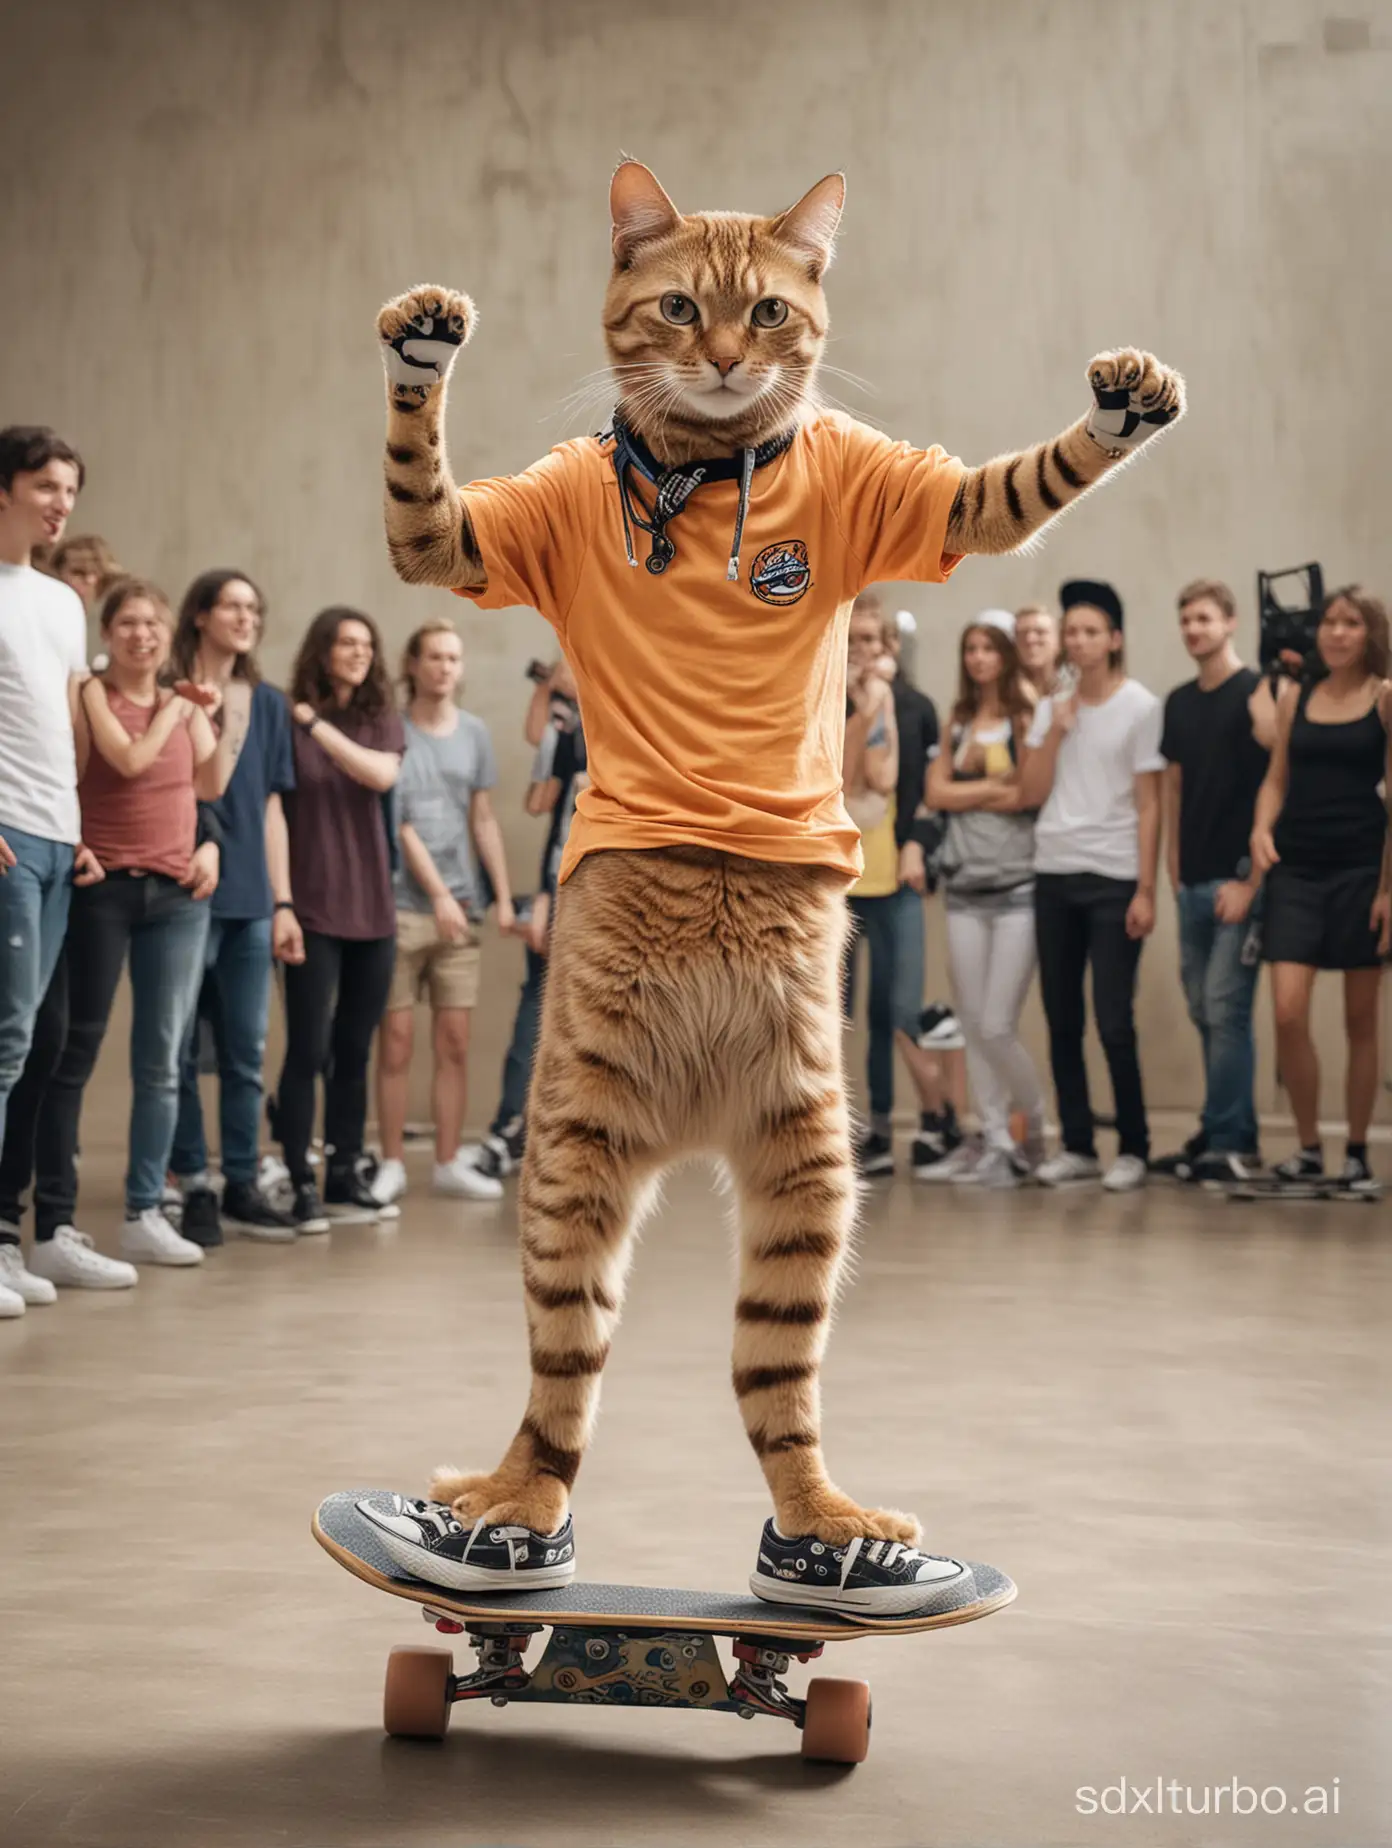 Athletic-Anthropomorphic-Cat-Performing-Extreme-Skateboard-Tricks-Among-Skateboarders